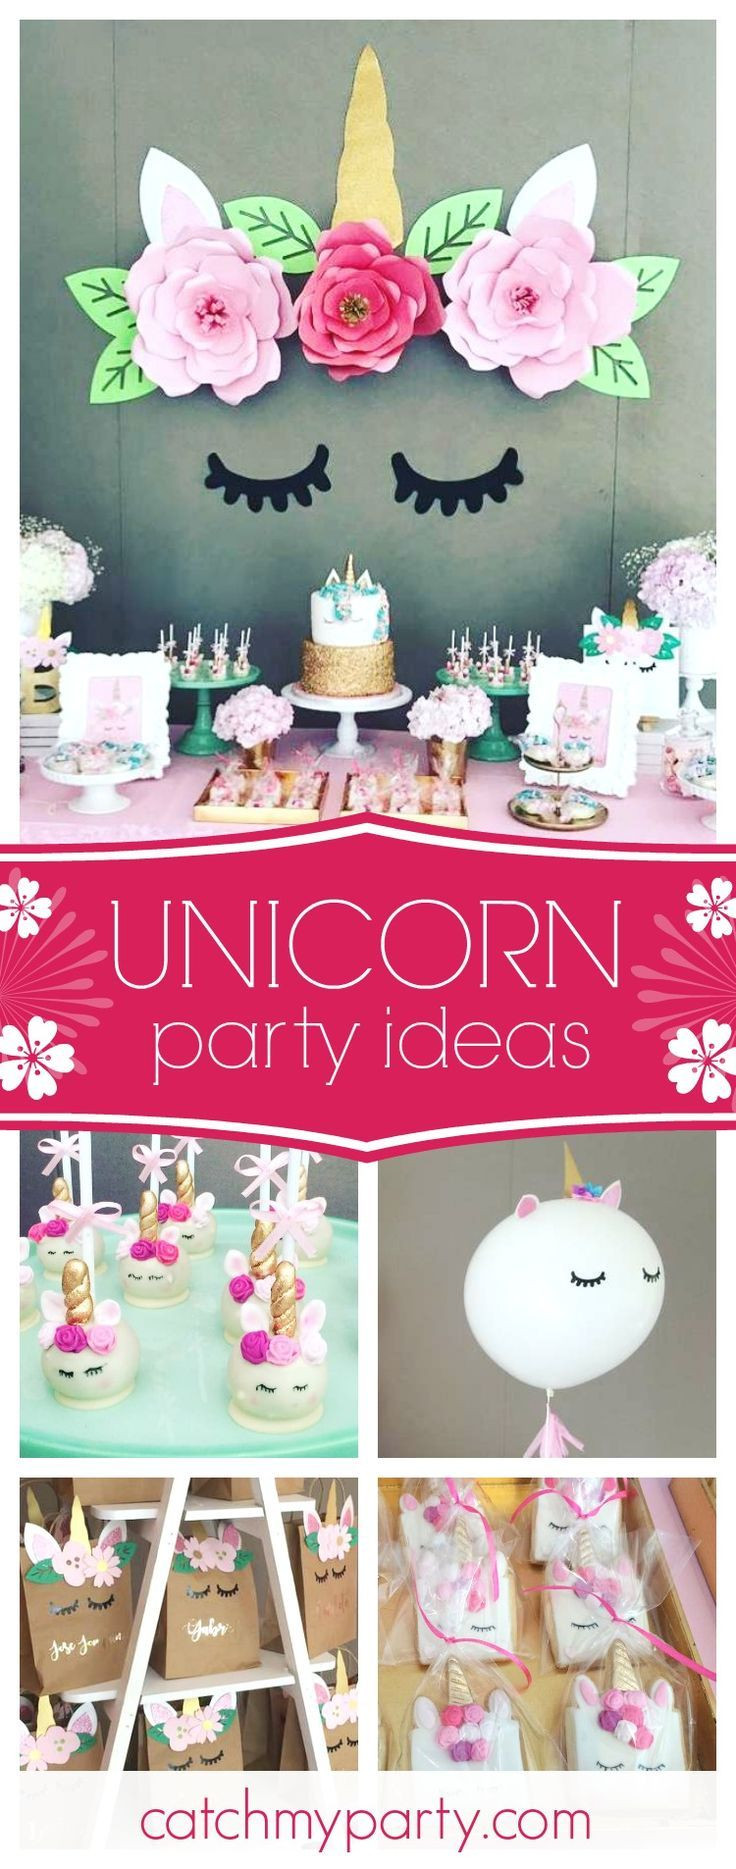 Unicorn Party Decorating Ideas
 Best 25 Unicorn birthday parties ideas on Pinterest